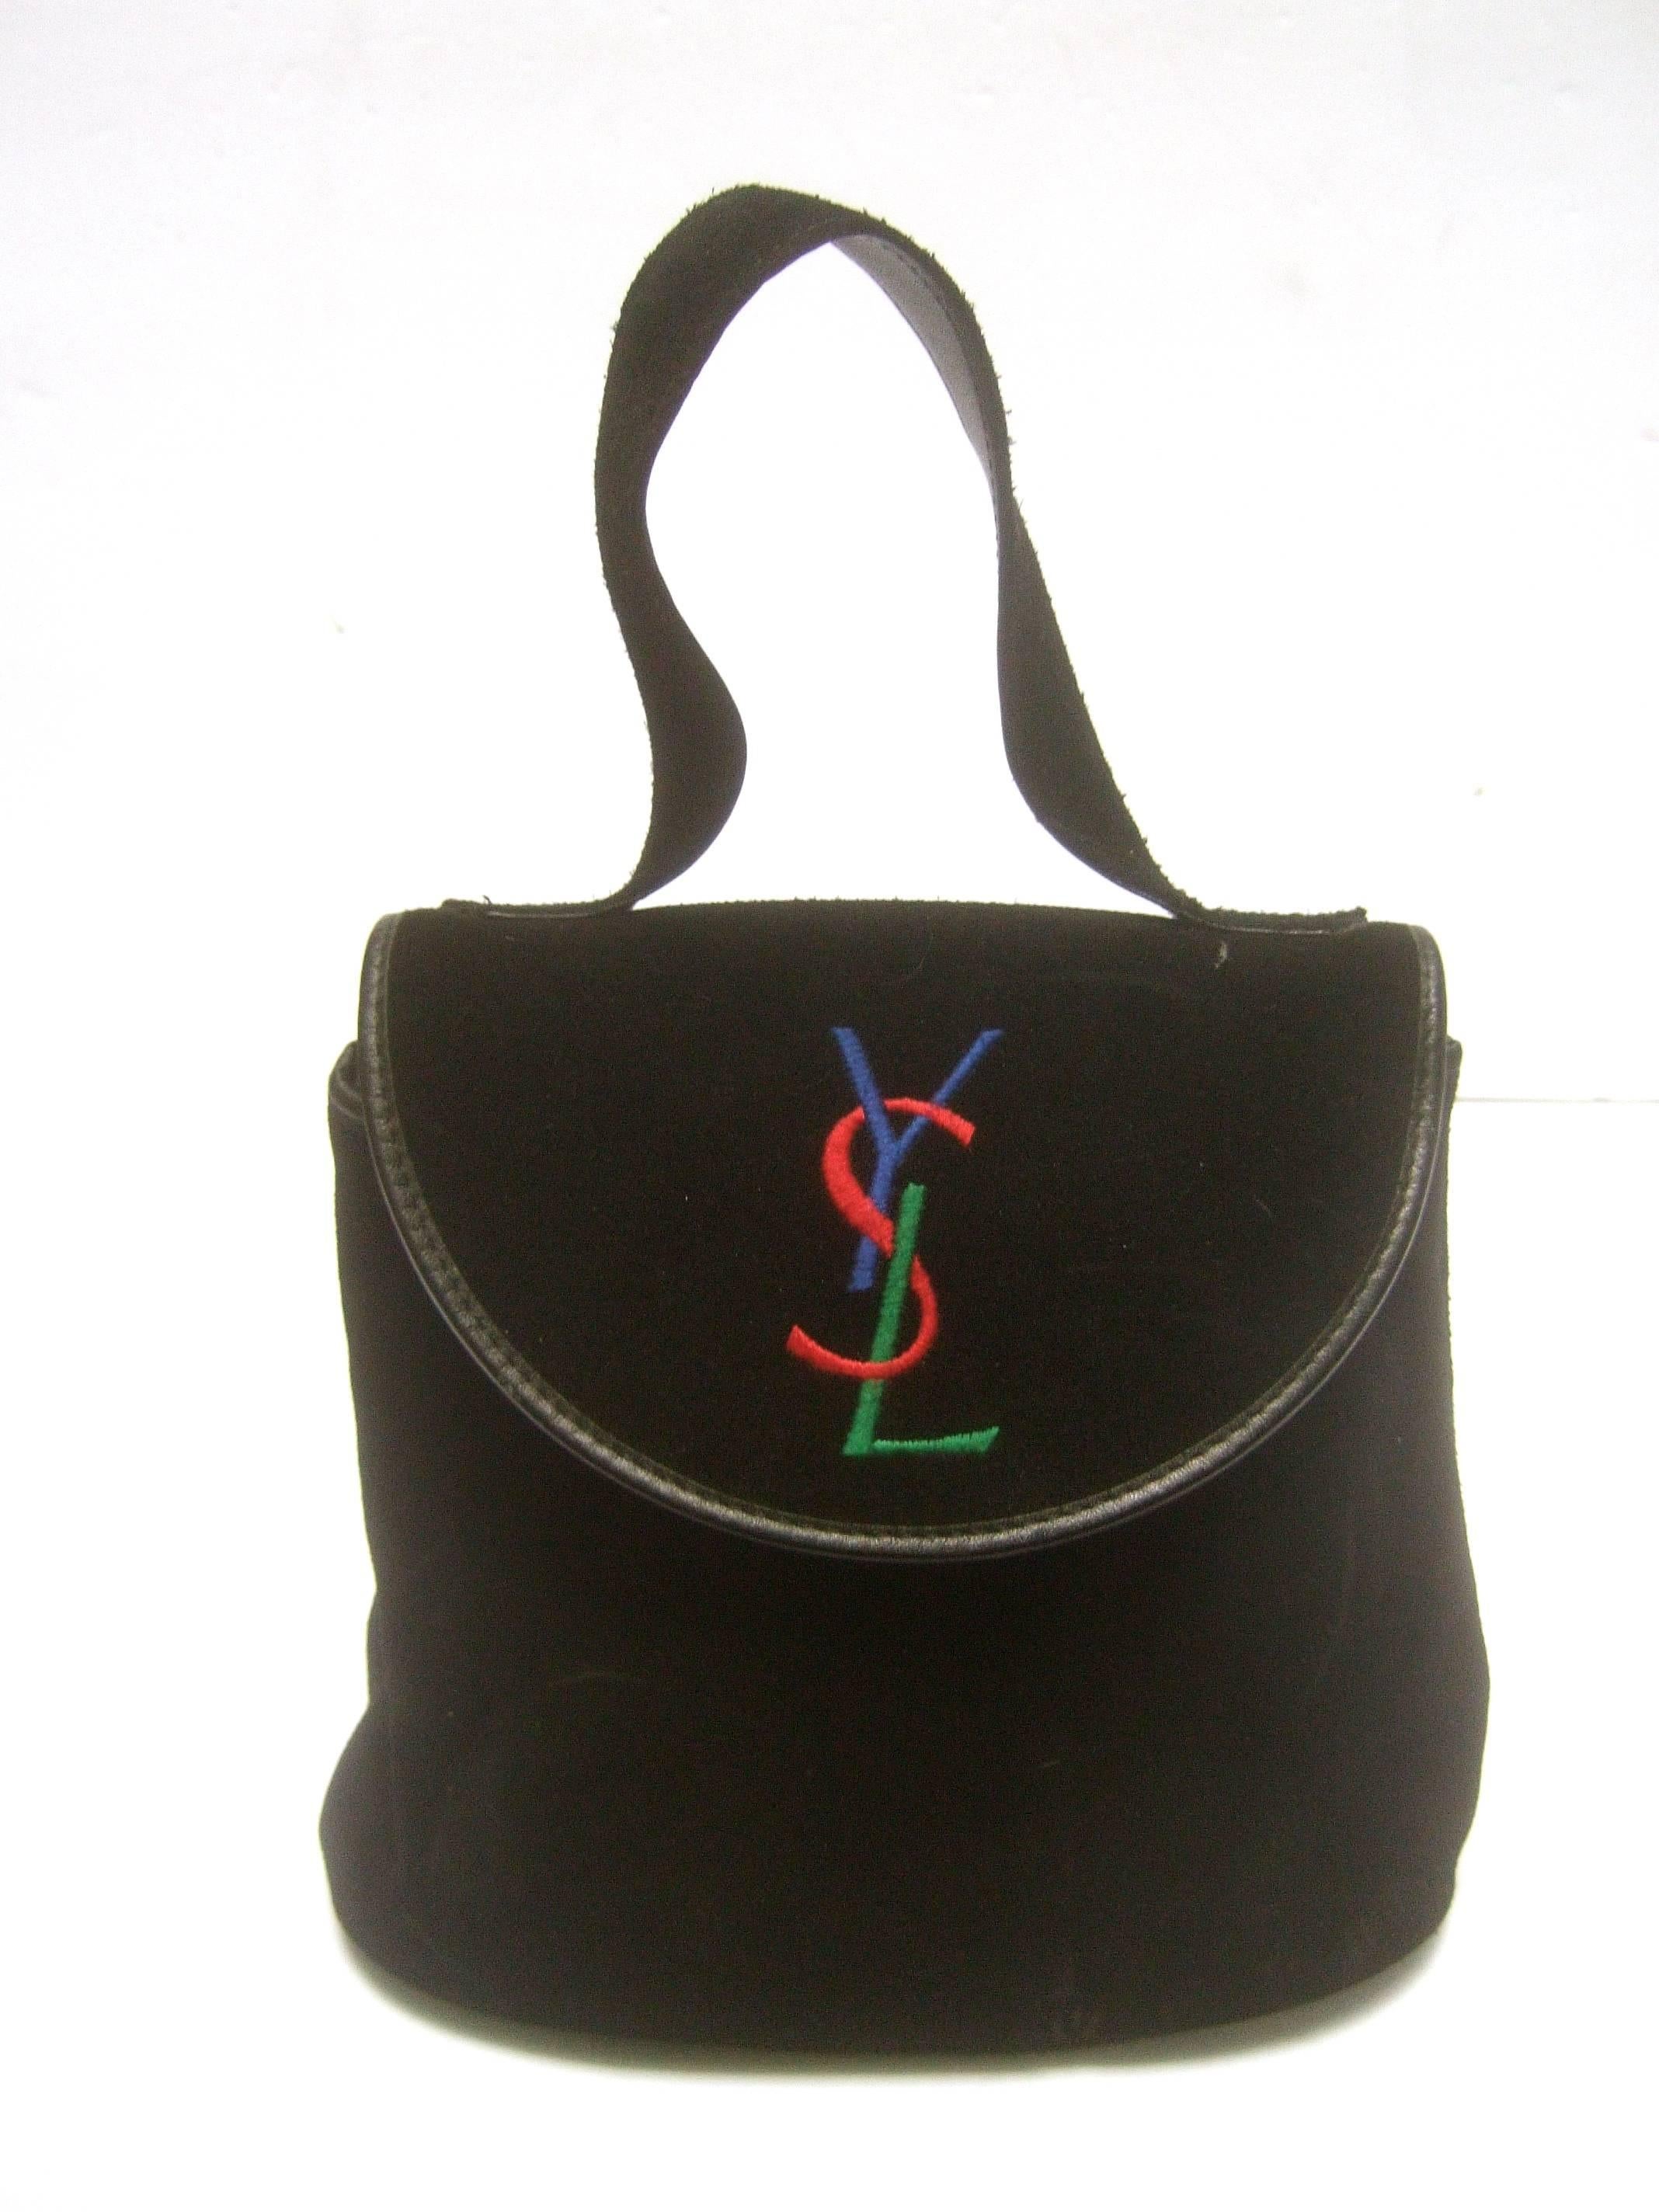 ysl embroidered bag